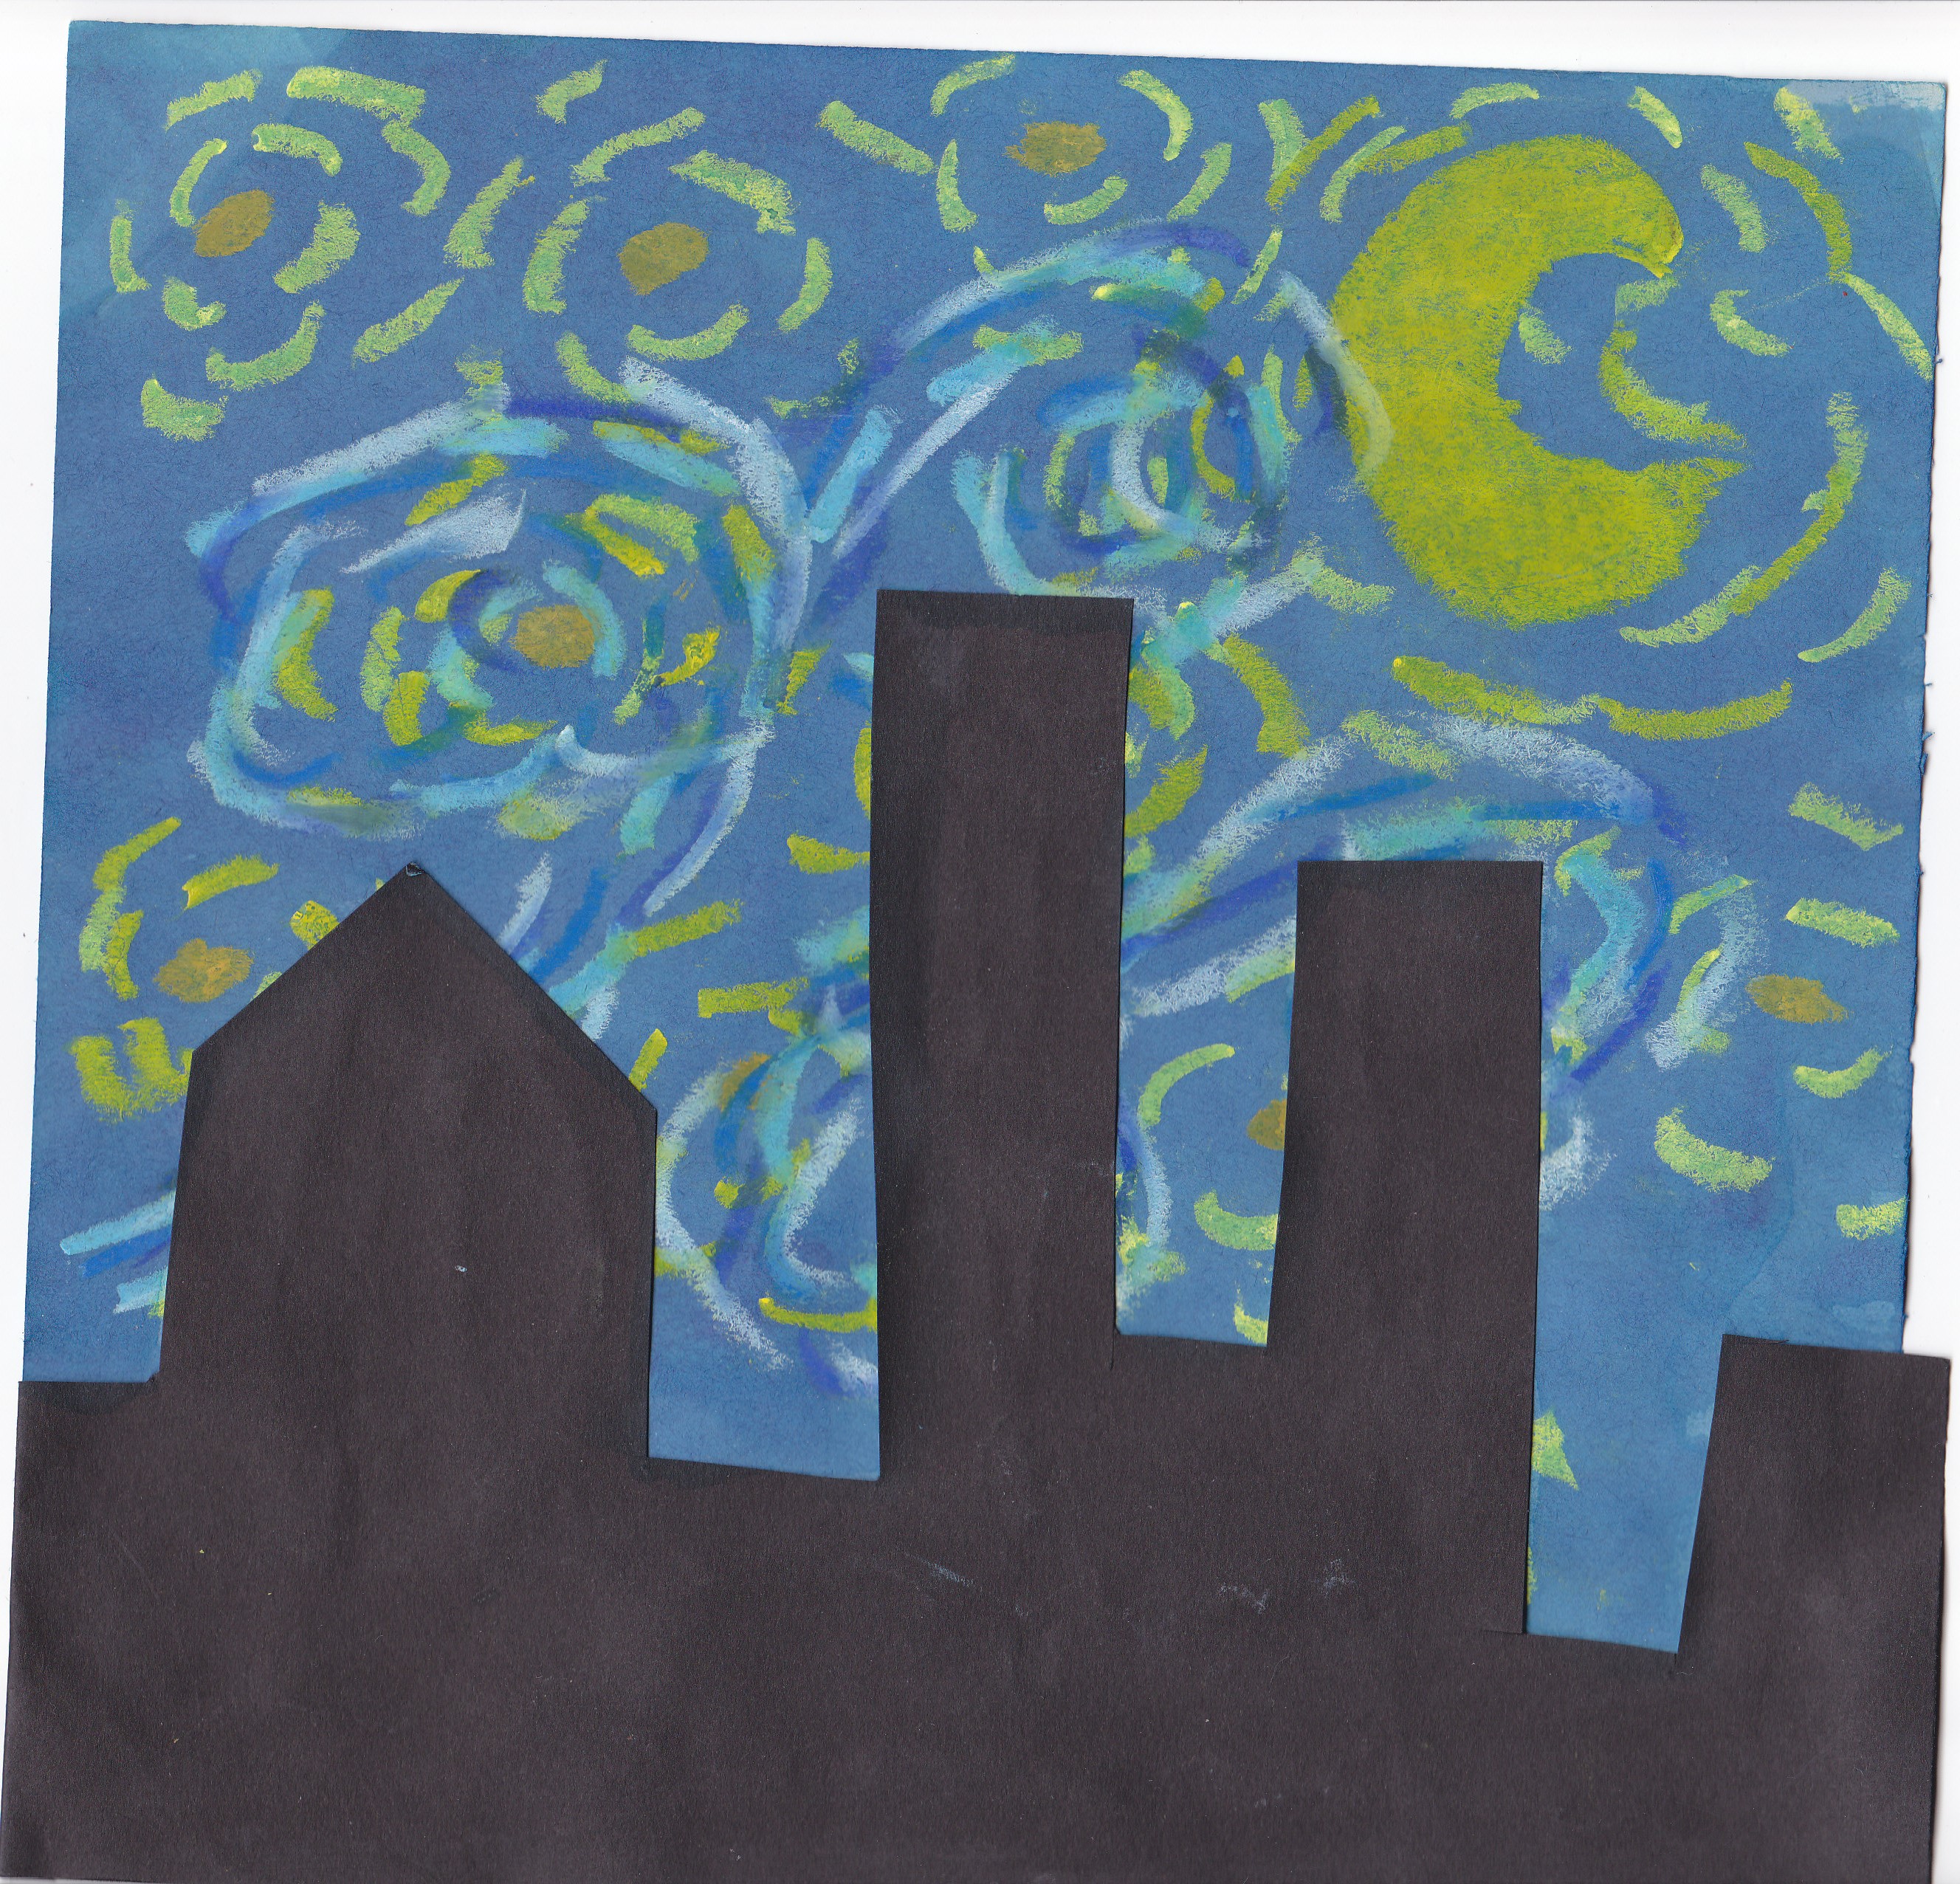 Van Gogh: “The Starry Night”